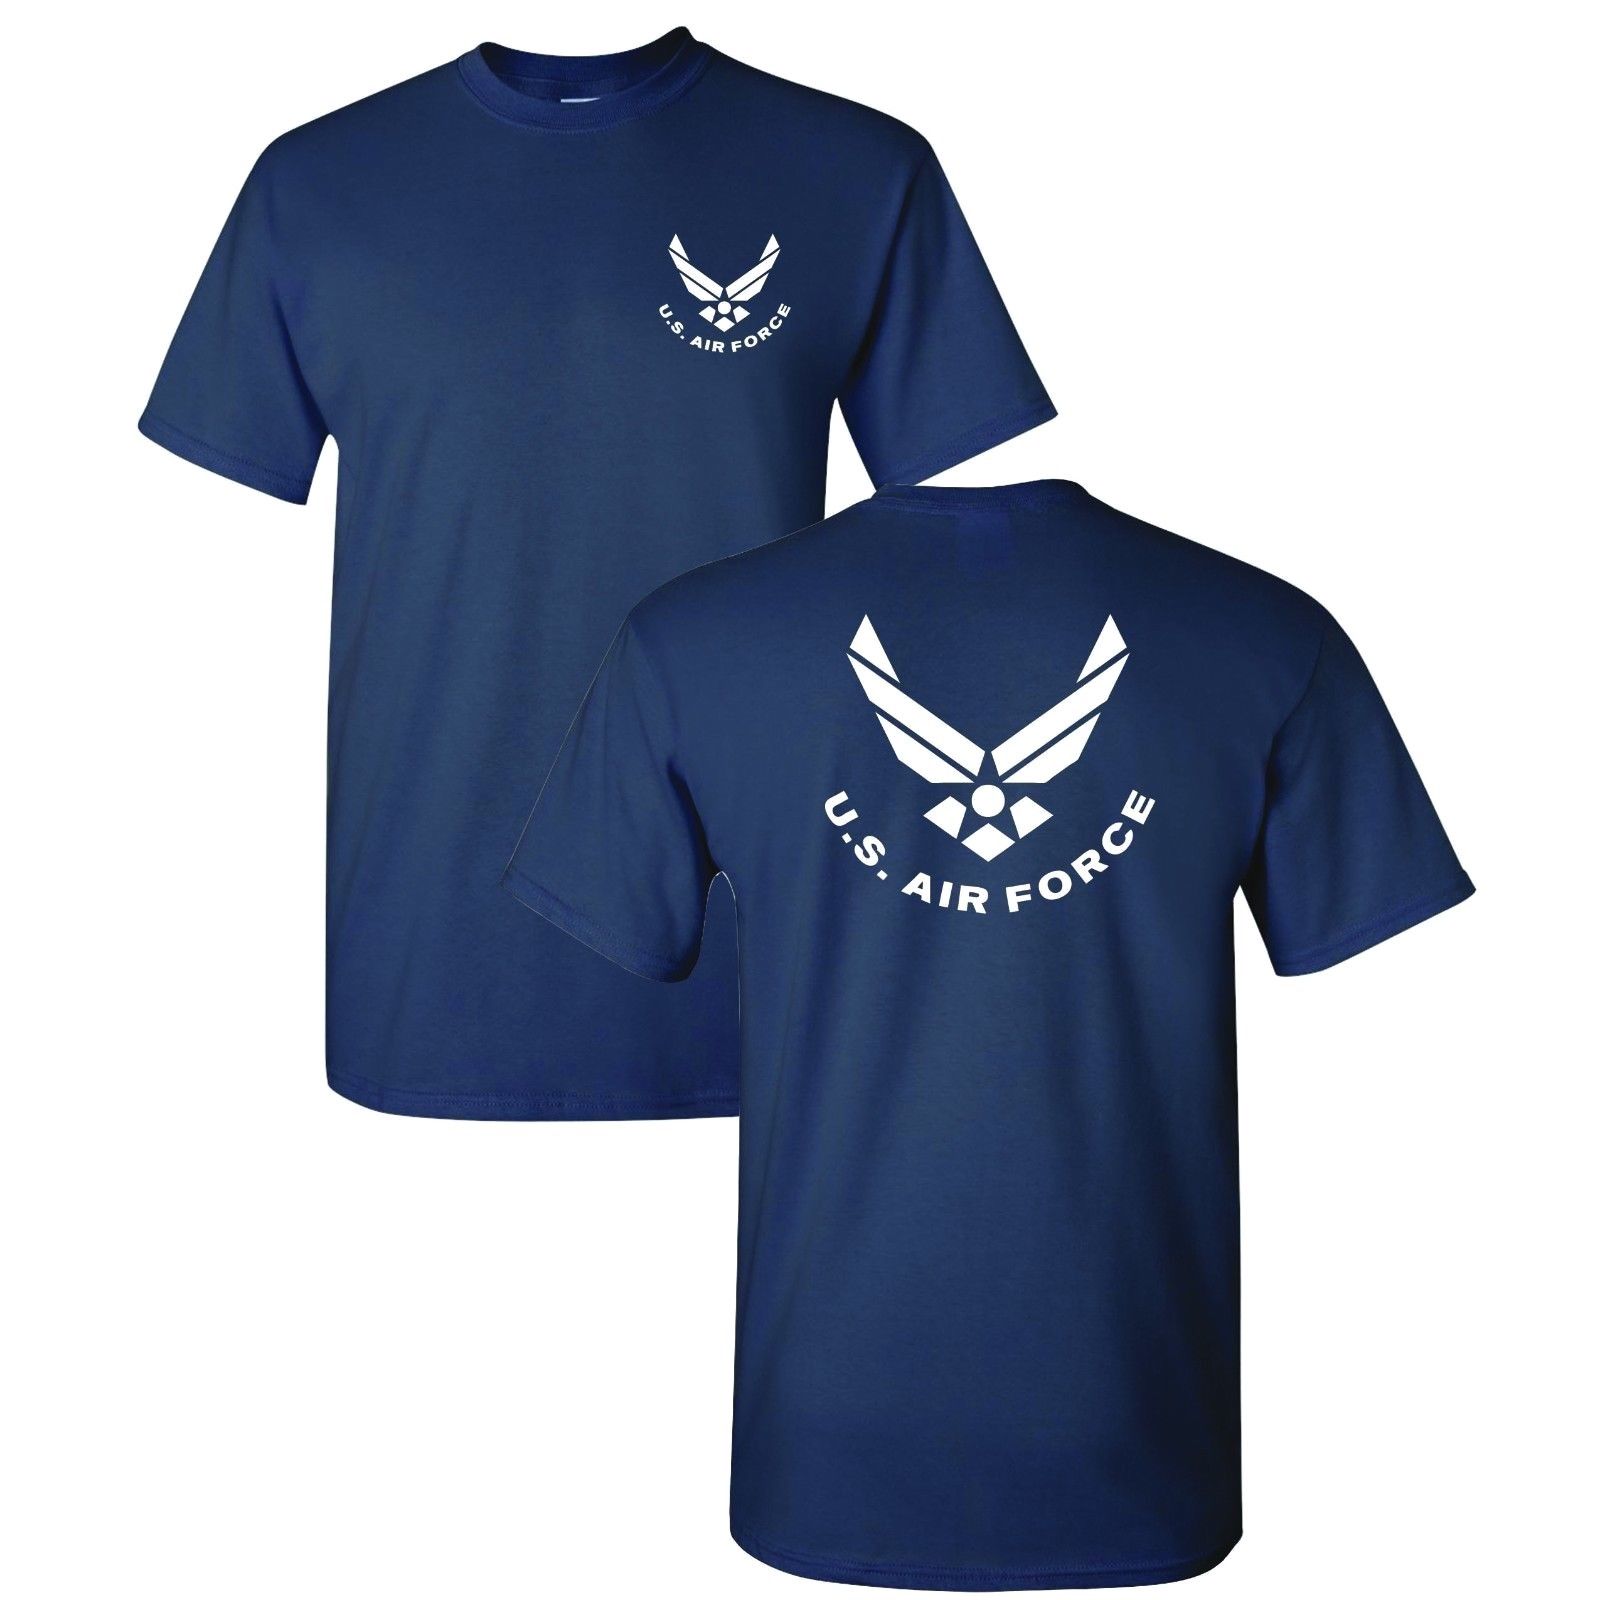 Mode Casual Mannen Katoenen T-shirt U. s. Luchtmacht Usaf Kleine Front Grote Terug Logo Navy T-shirt Cool Tees Tops Streetwear